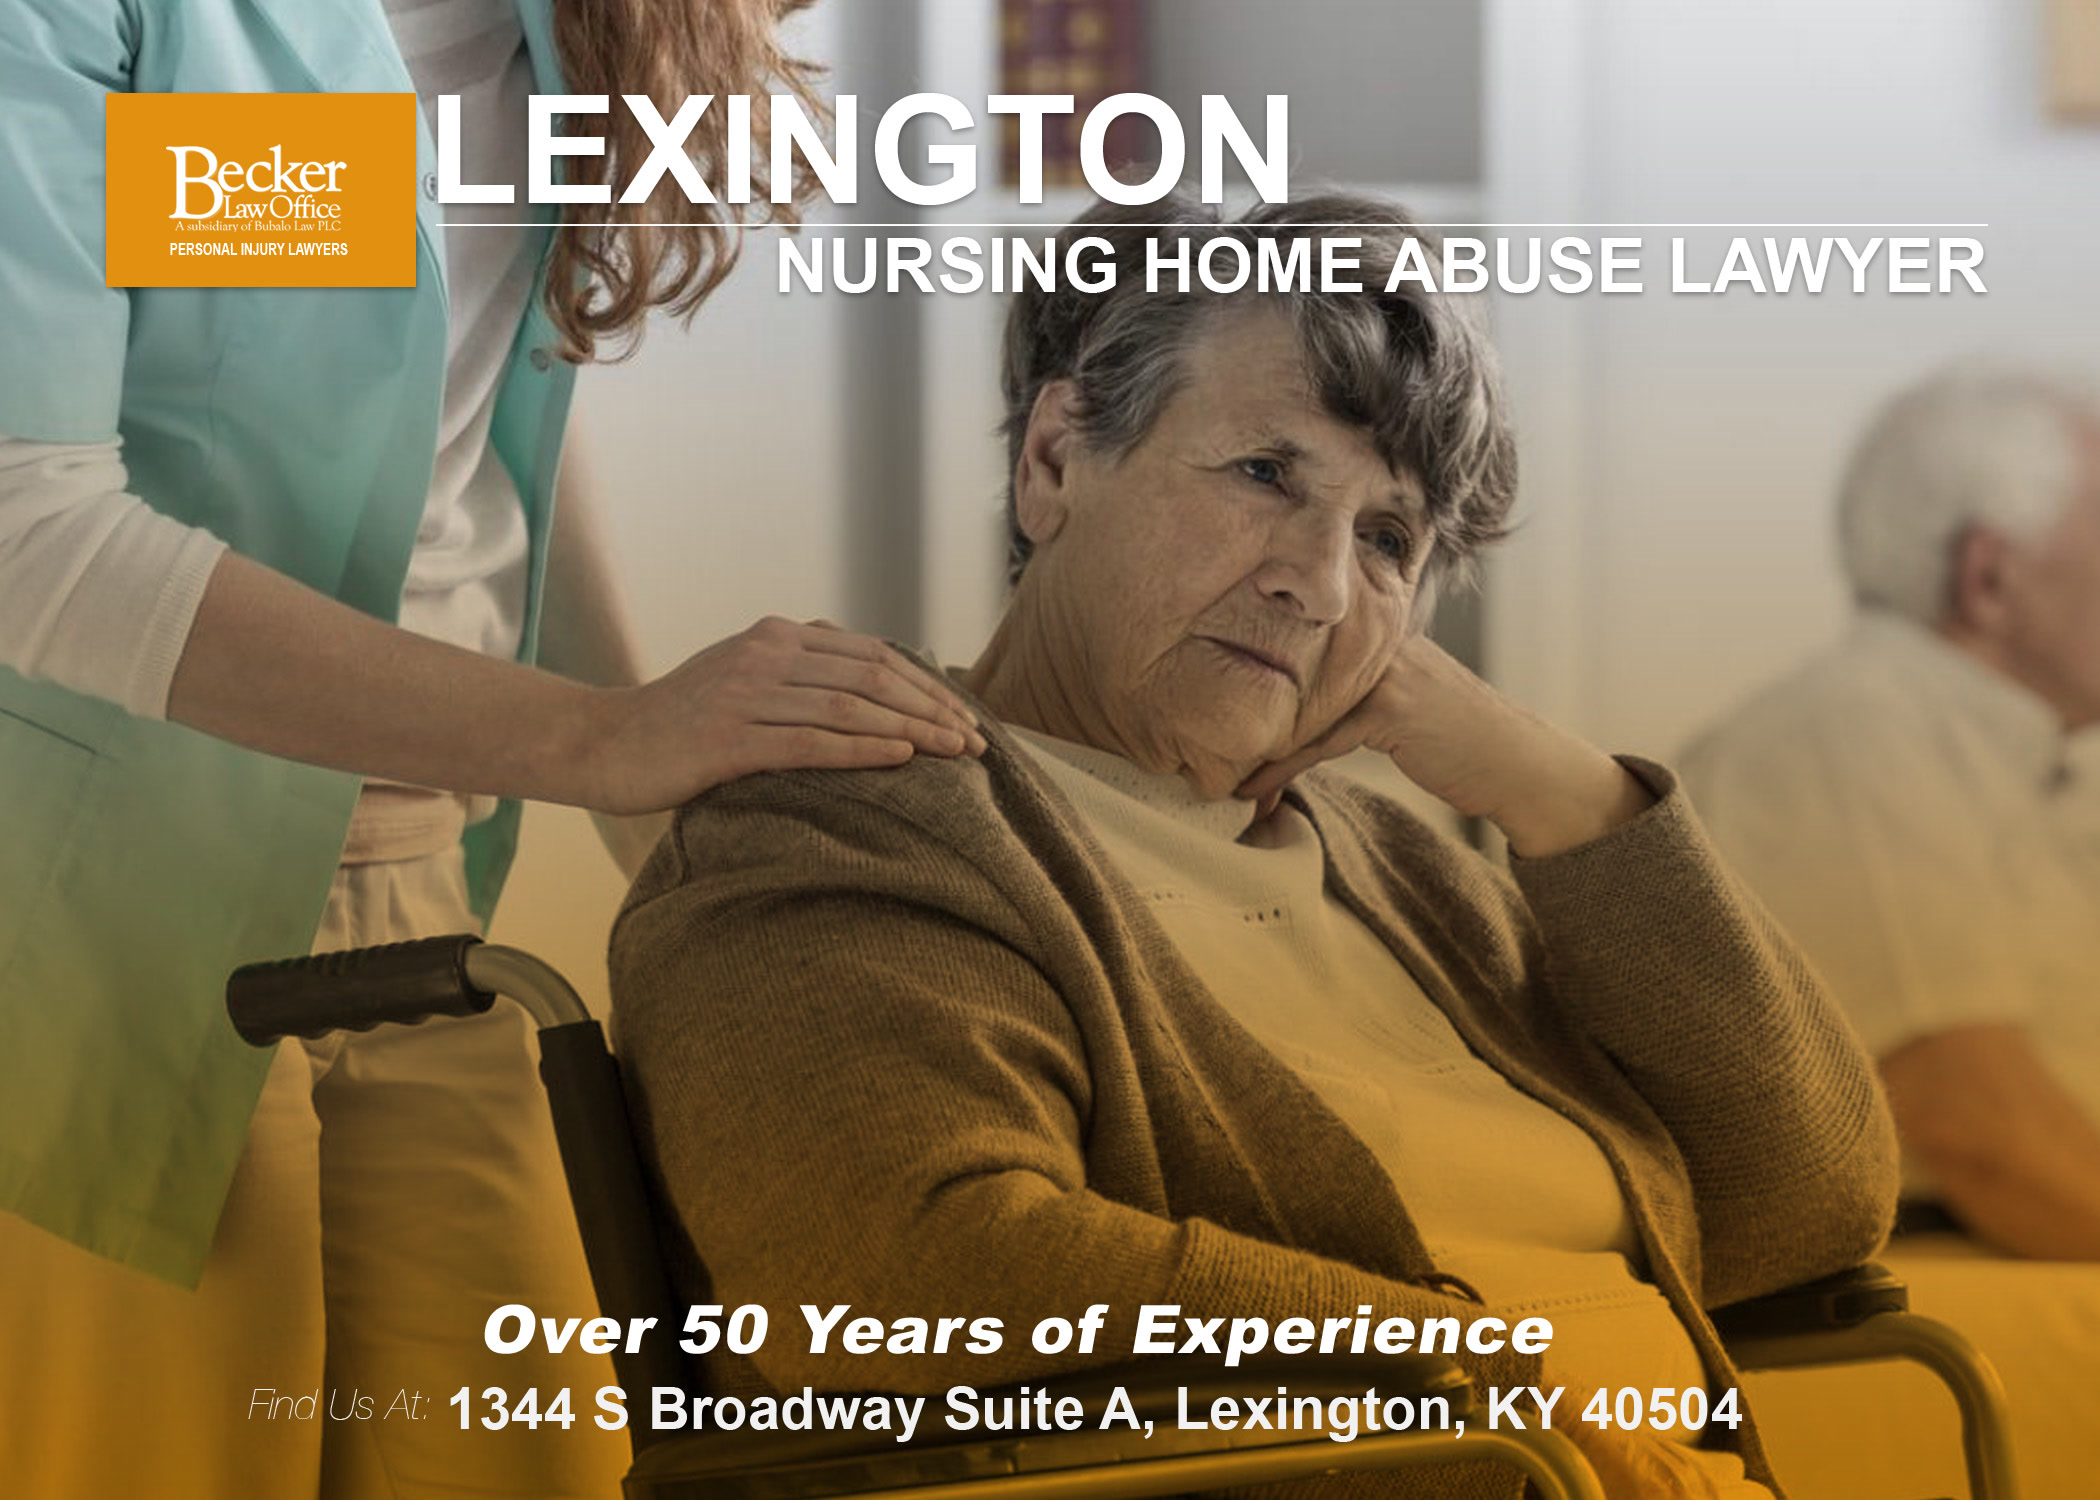 Lexington nursing home abuse